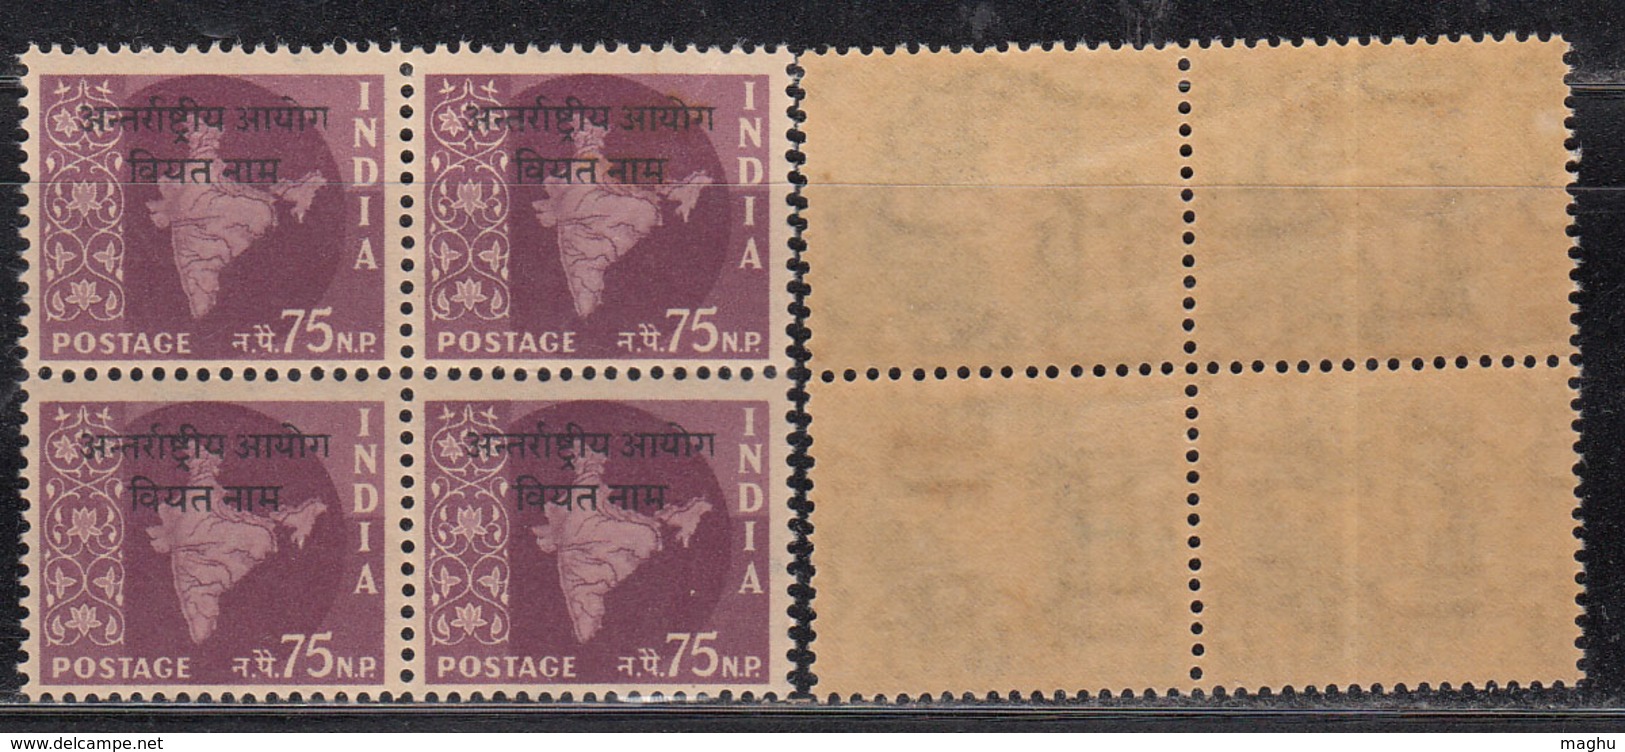 Block Of 4, 75np Ovpt Vietnam On Map Series,  India MNH 1962, Ashokan Watermark, - Military Service Stamp